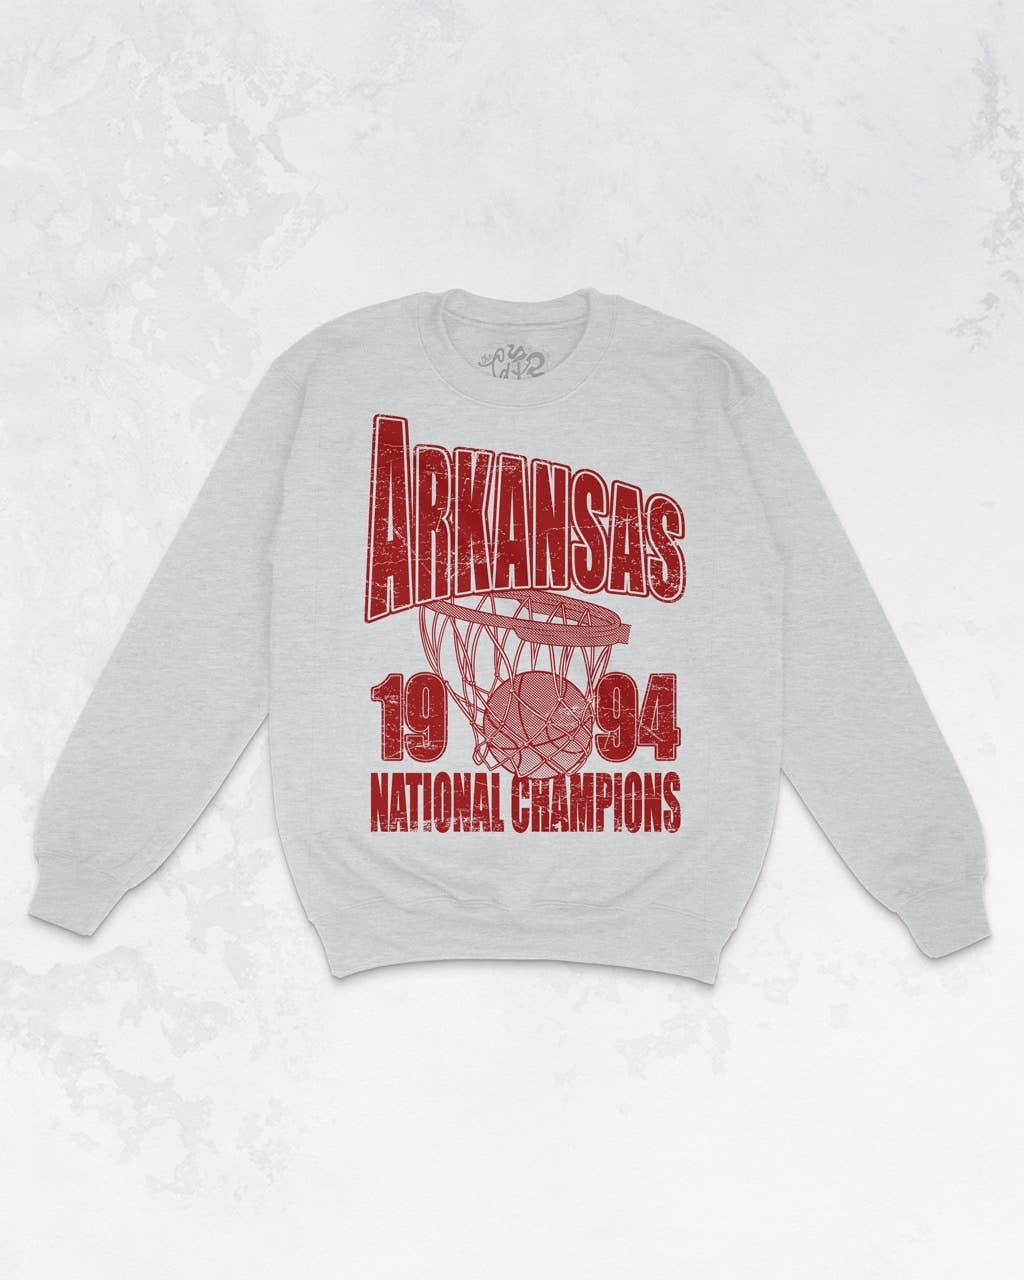 Arkansas Basketball National Champ Oversized 90's Sweatshirt